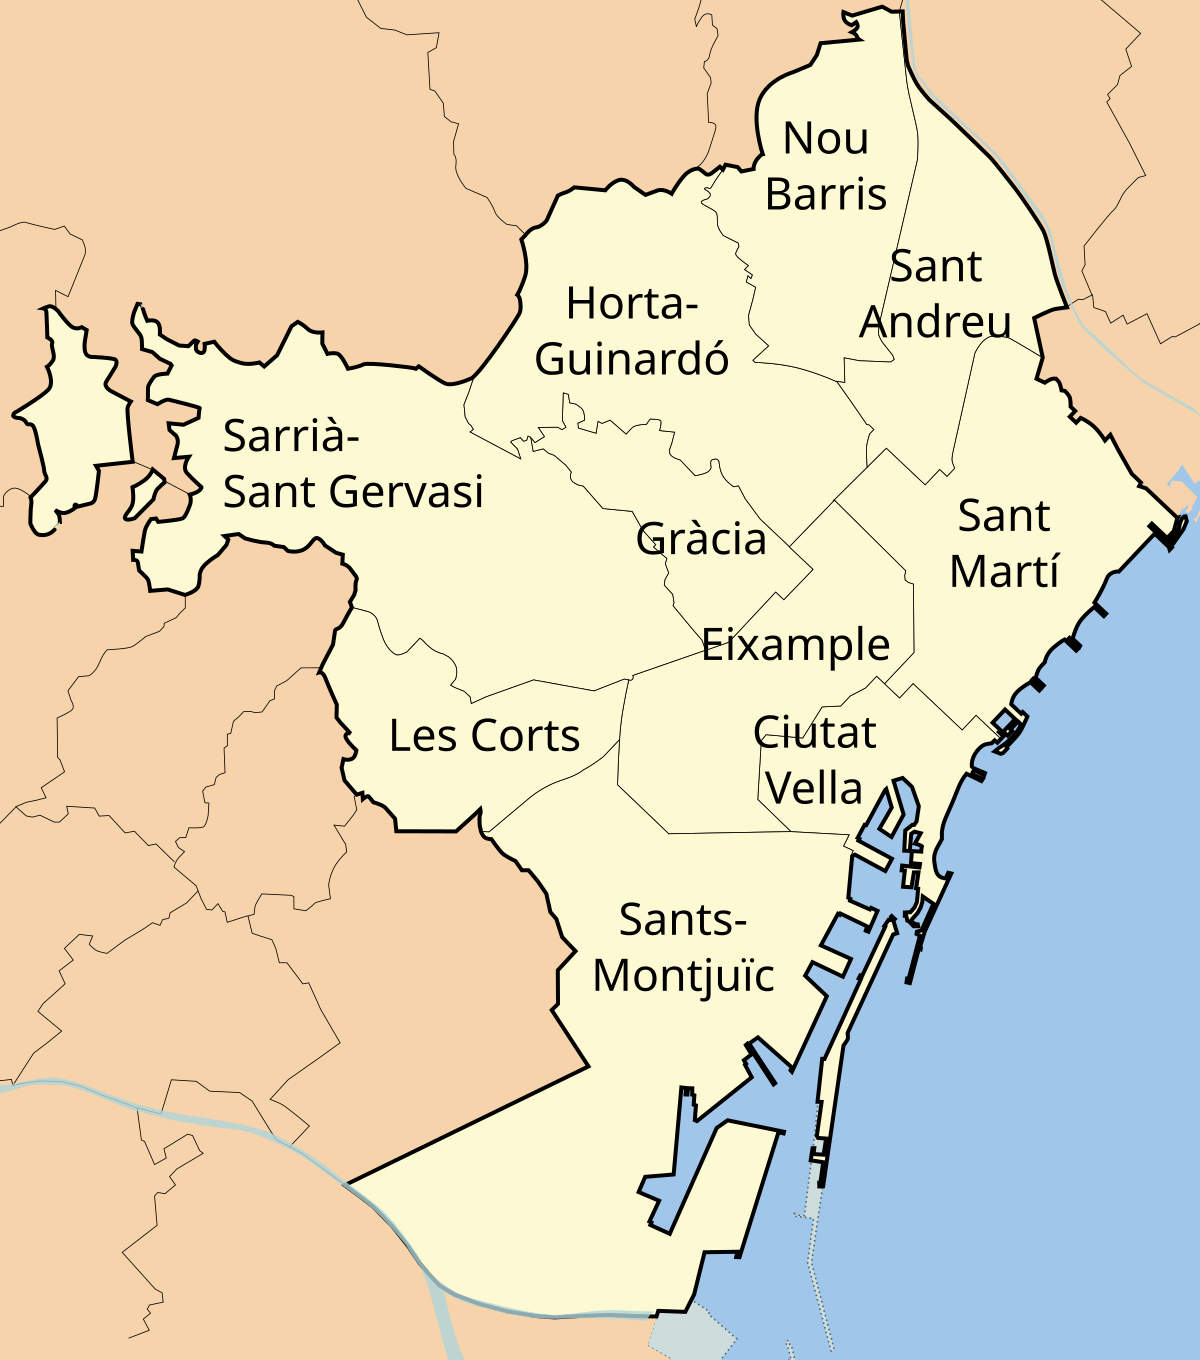 Turbulencia Influyente Perla Distritos de Barcelona - Wikipedia, la enciclopedia libre